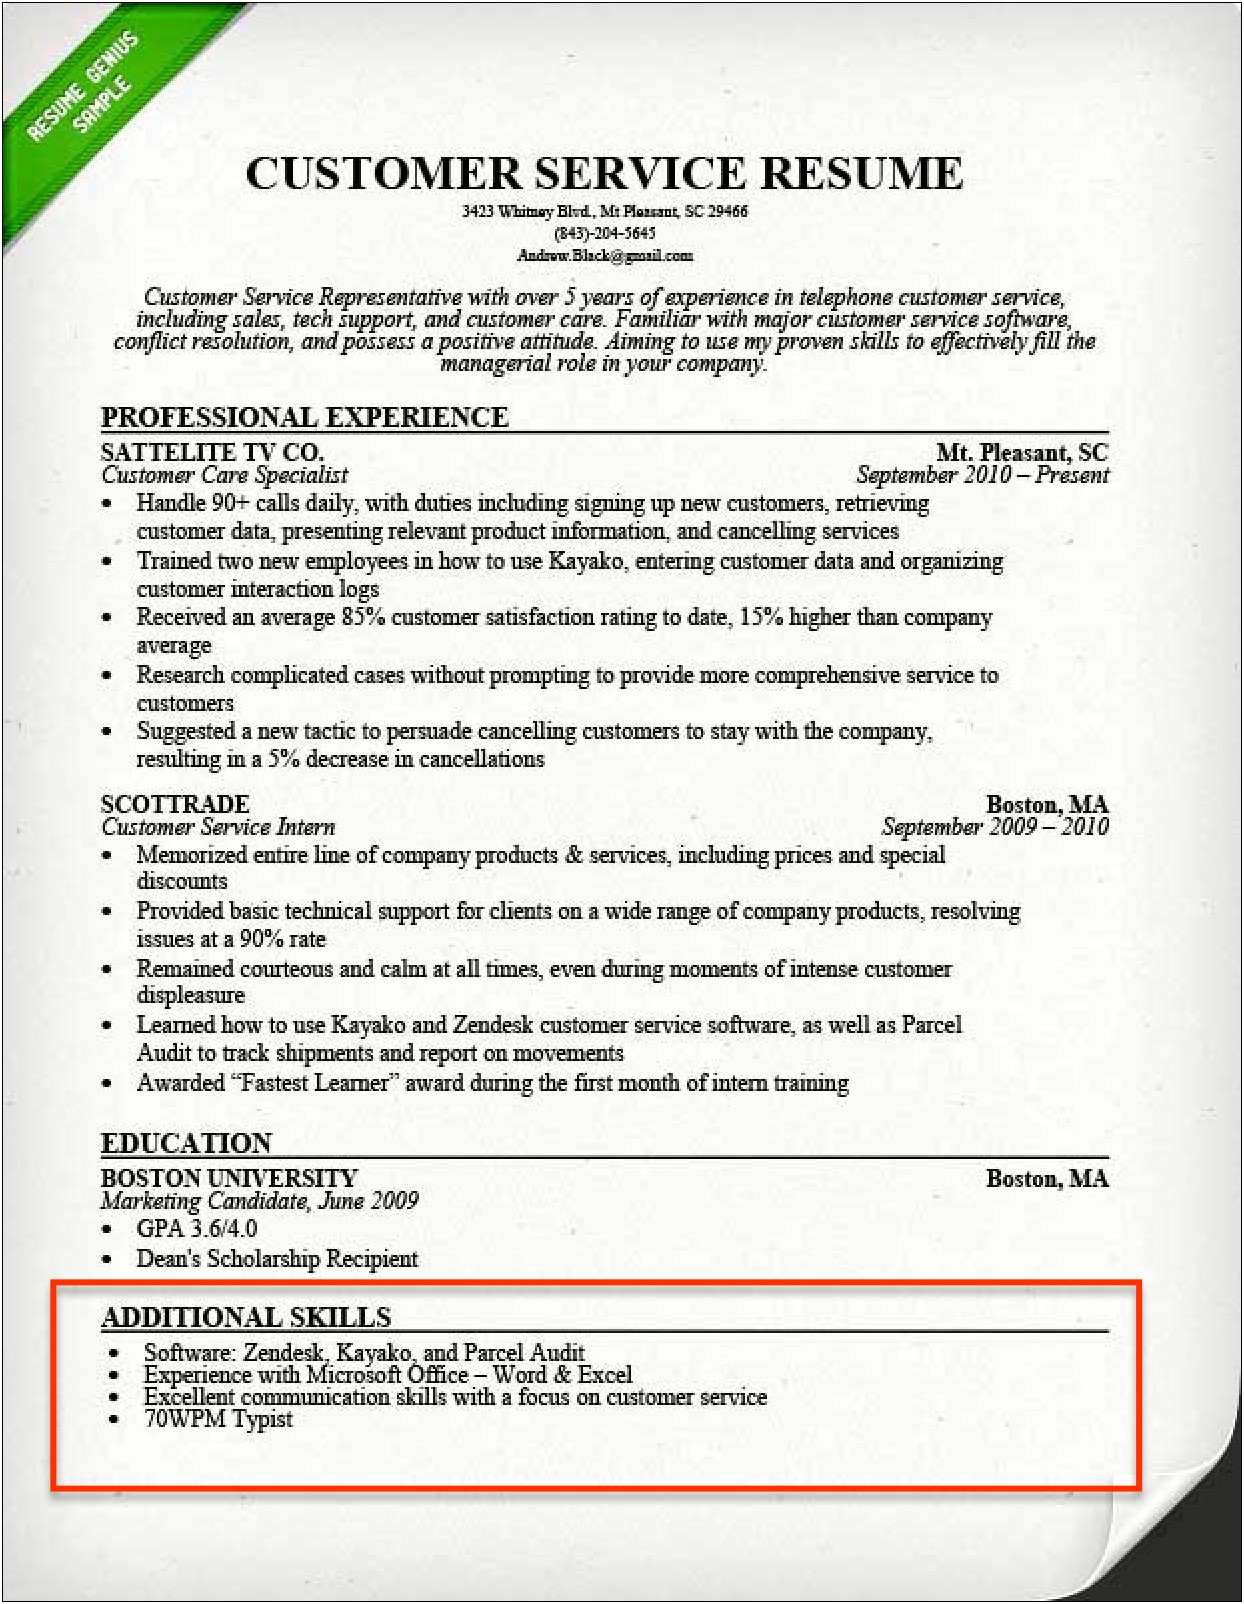 Resume Skills Section Customer Service